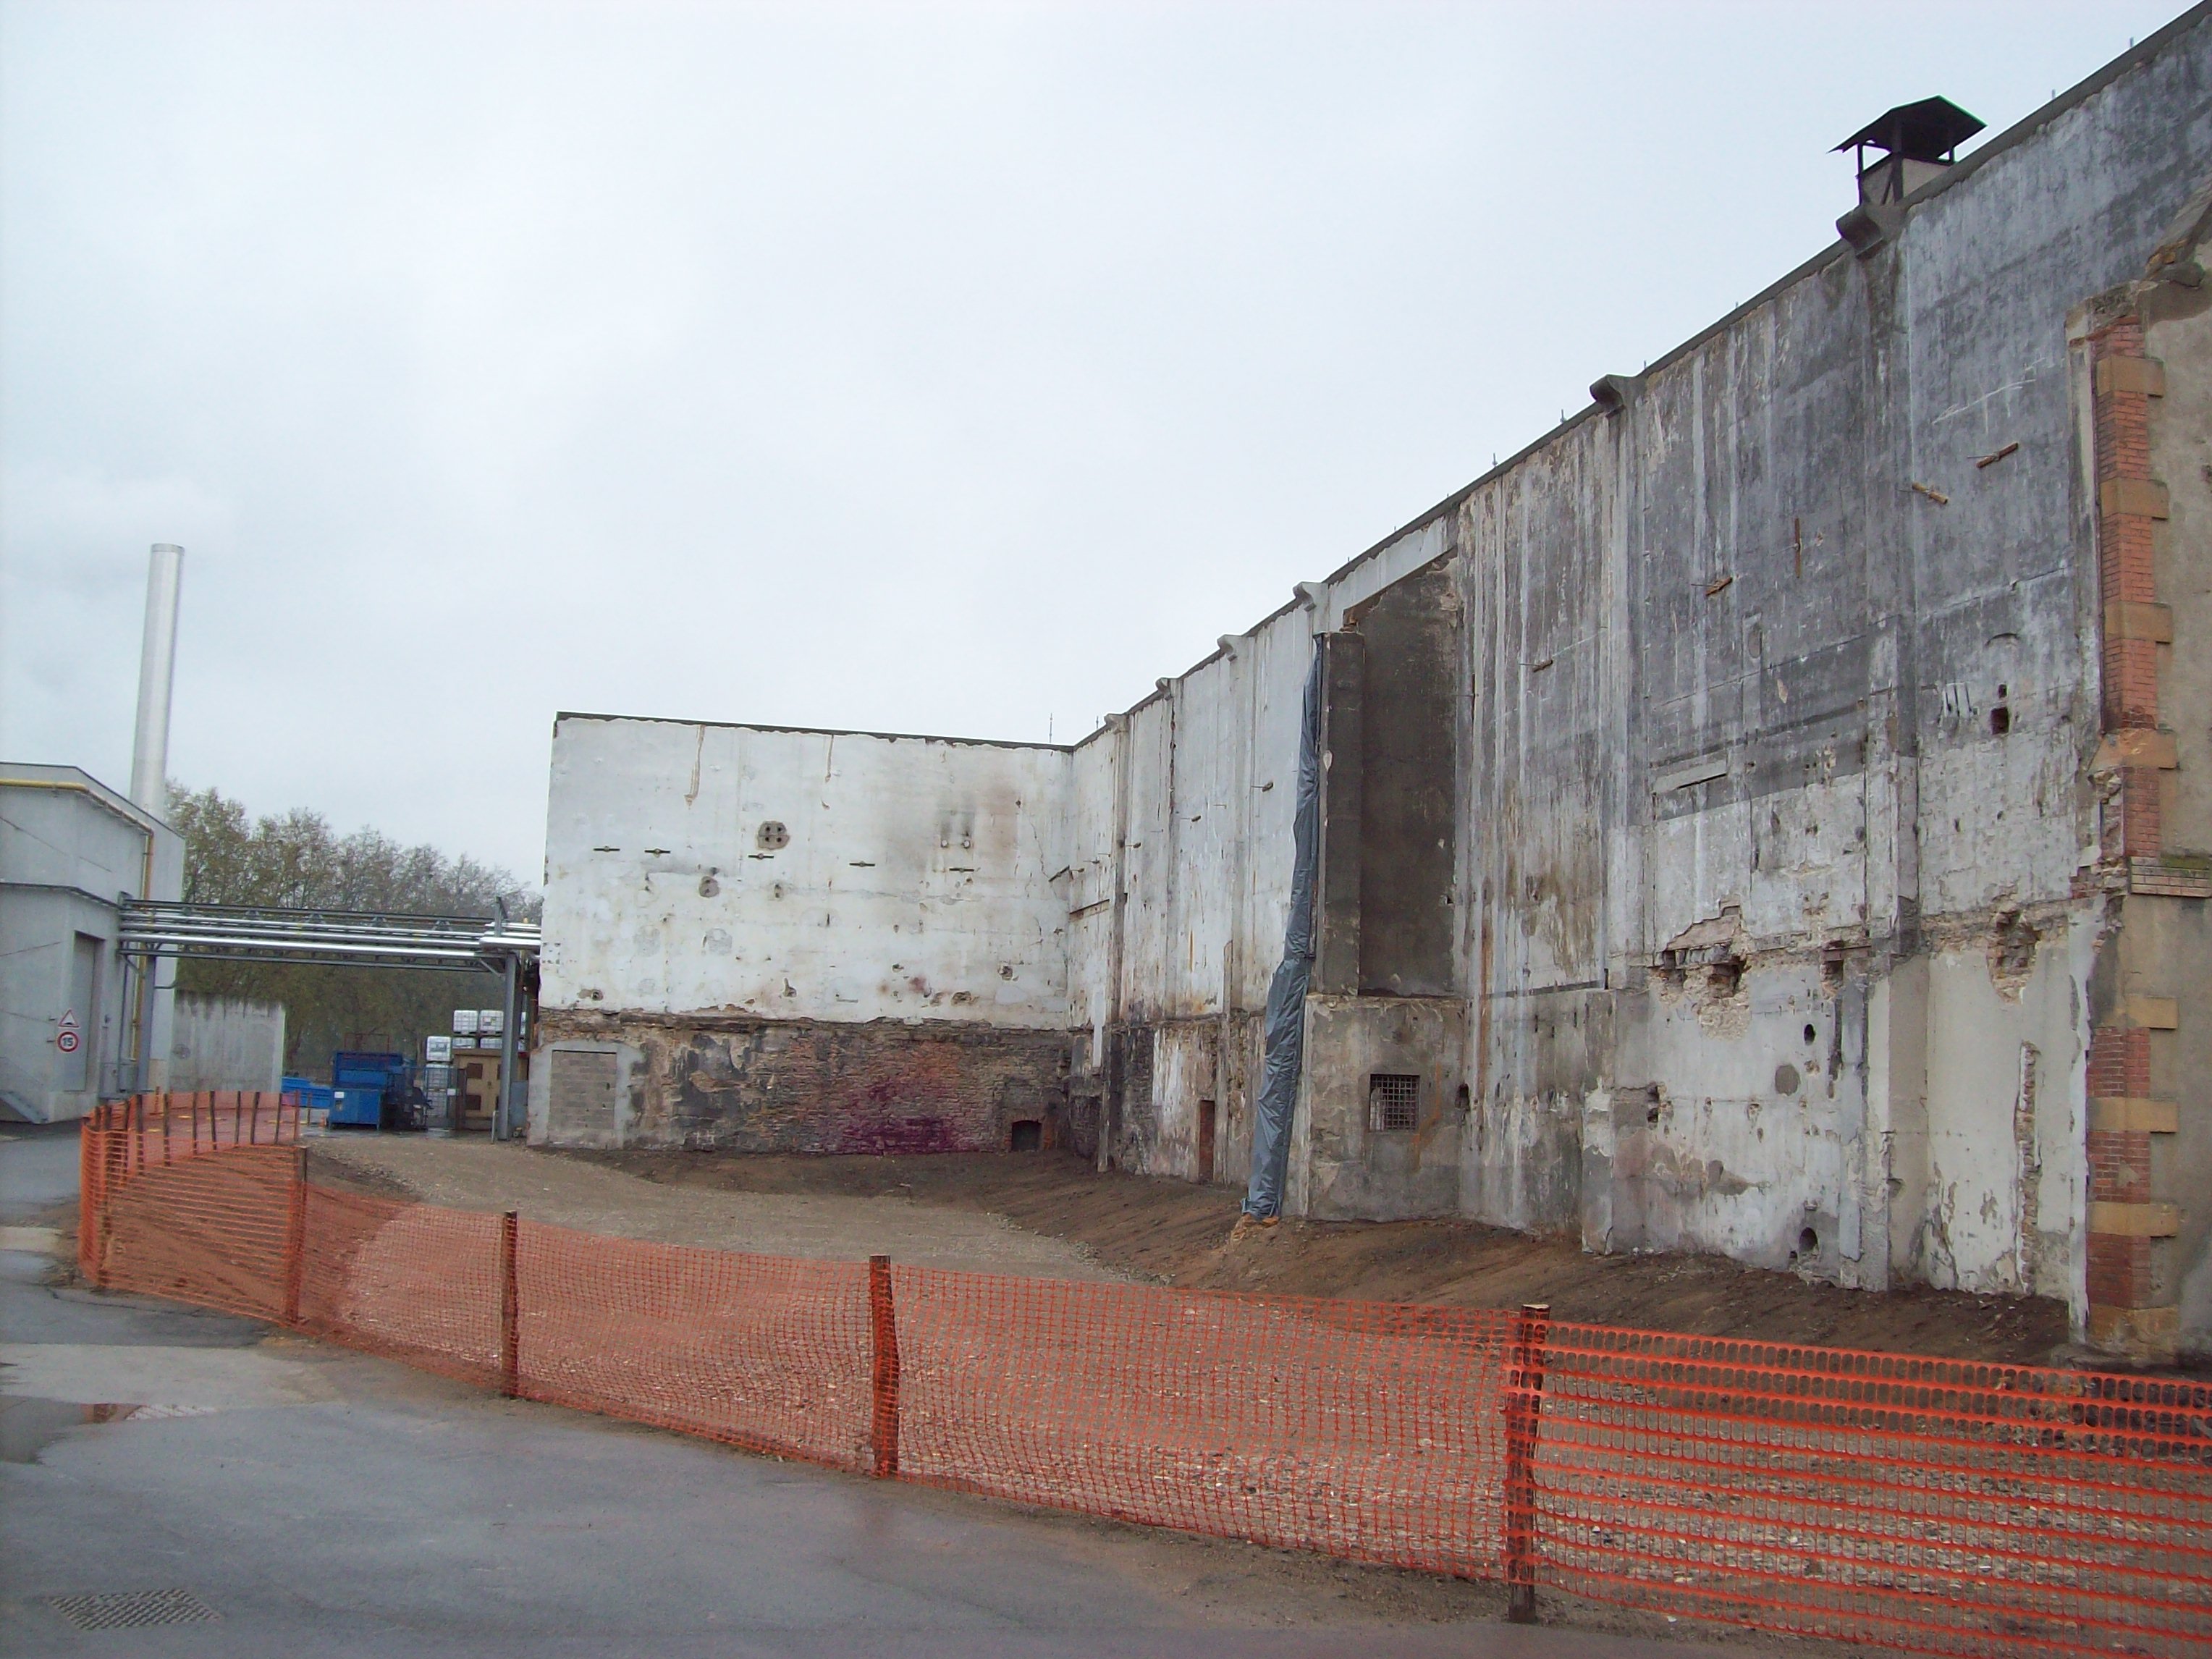 6-chantier6-demolition-cheminee-villefranche (6)